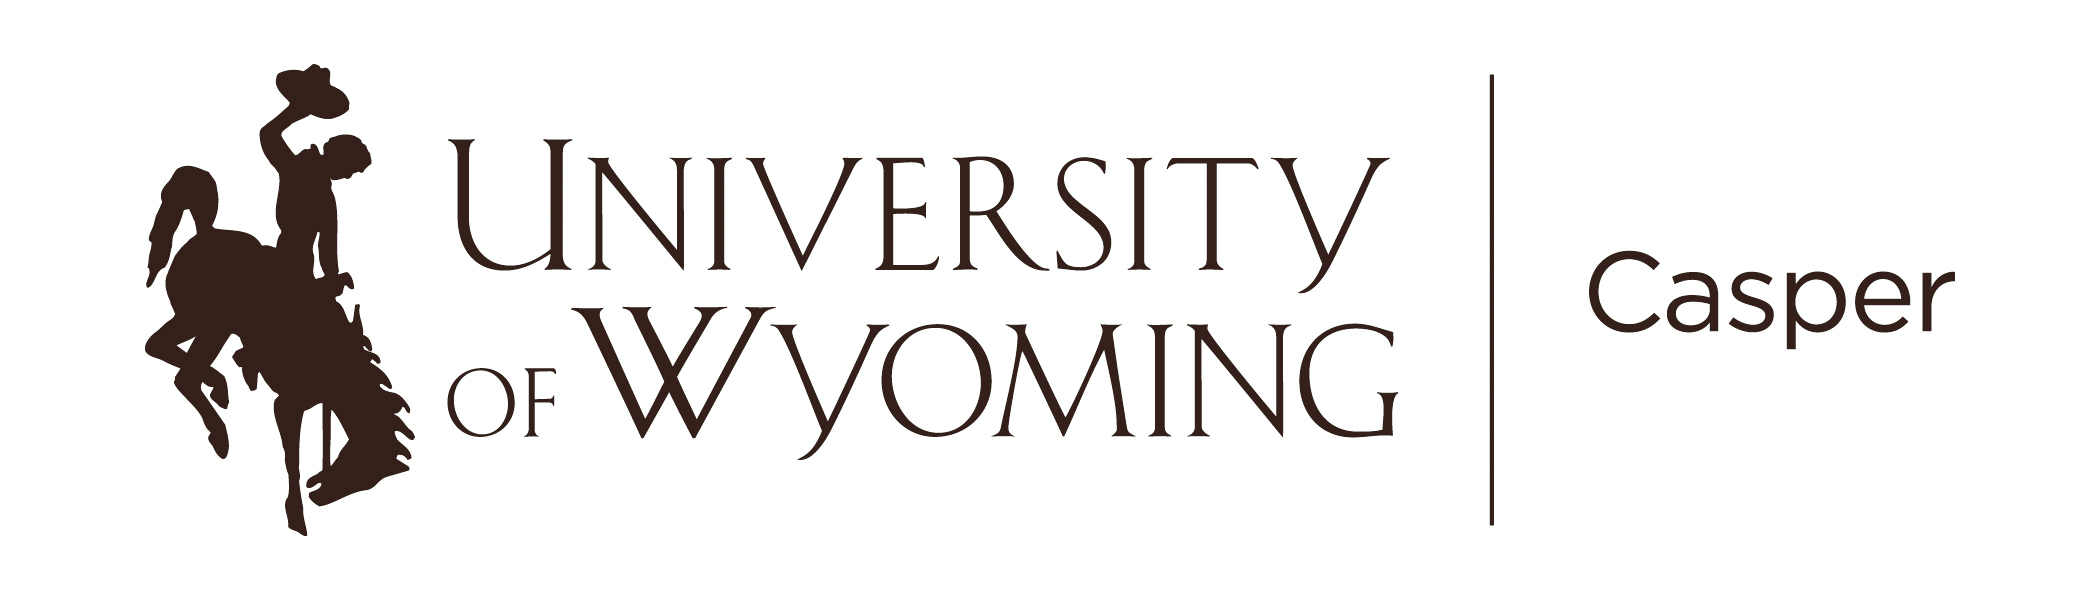 University of Wyoming at Casper